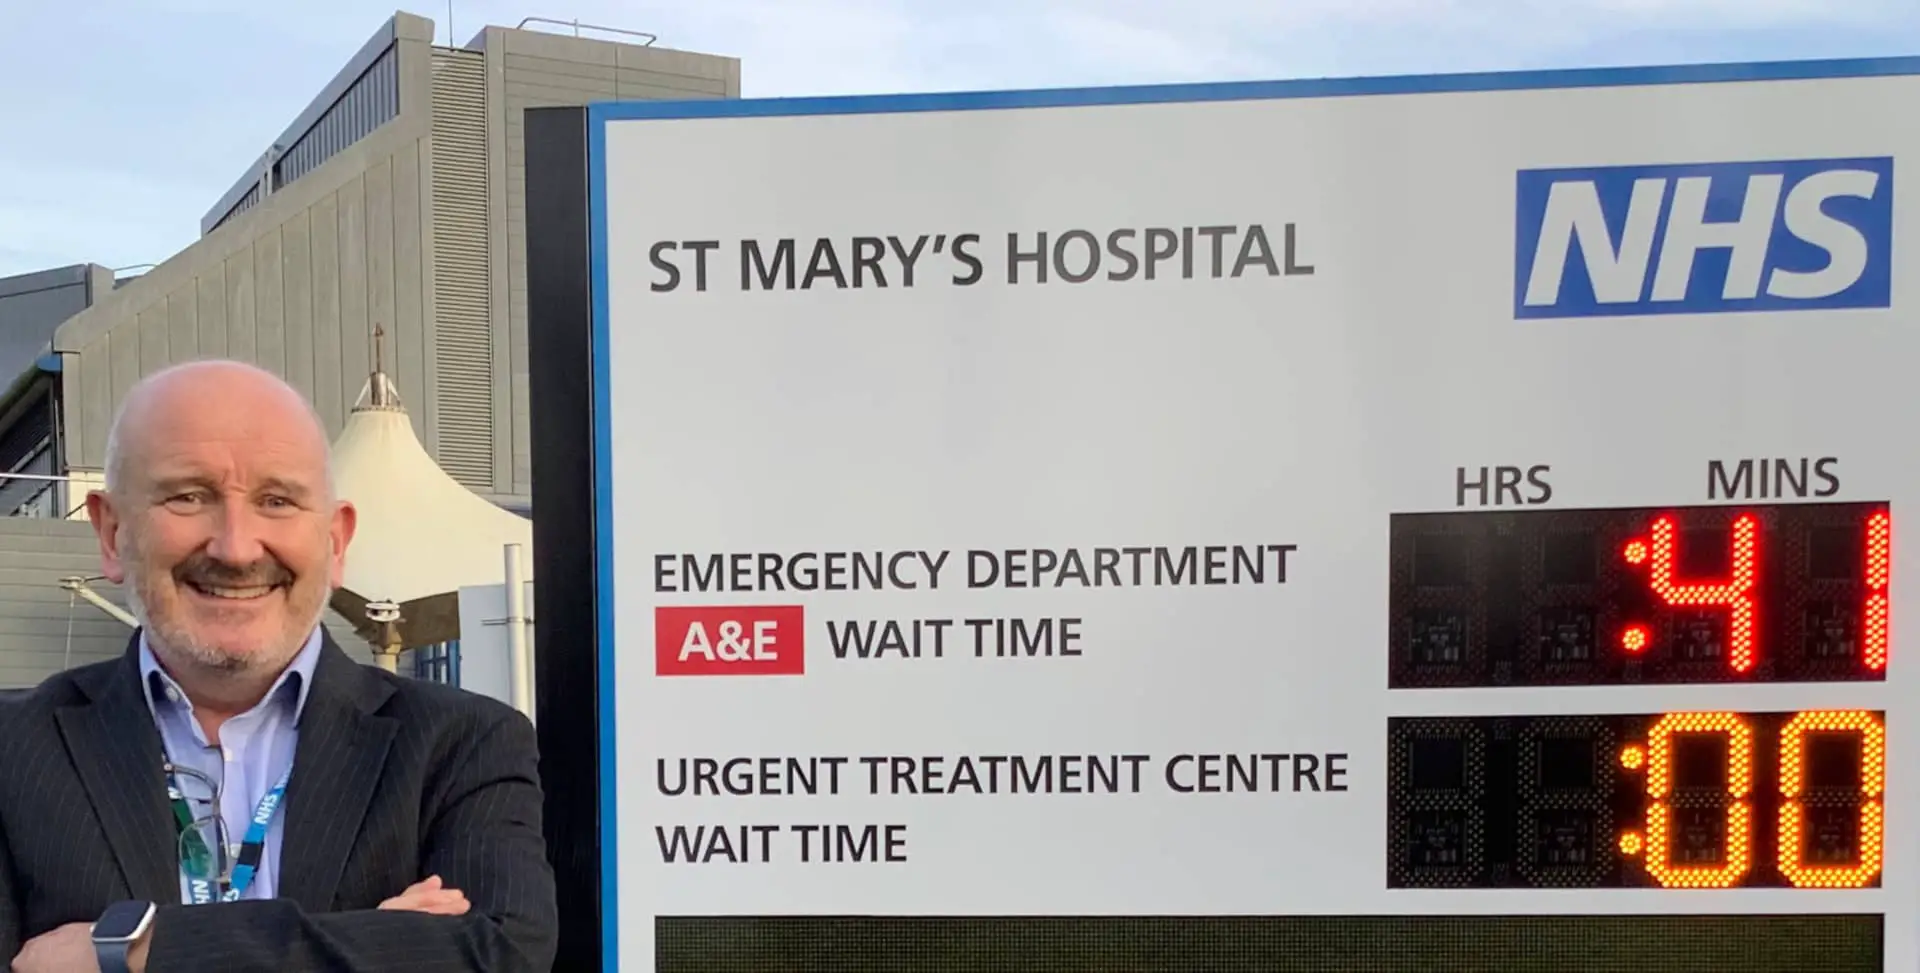 Photo of Joe Smyth outside St mary's Hospital